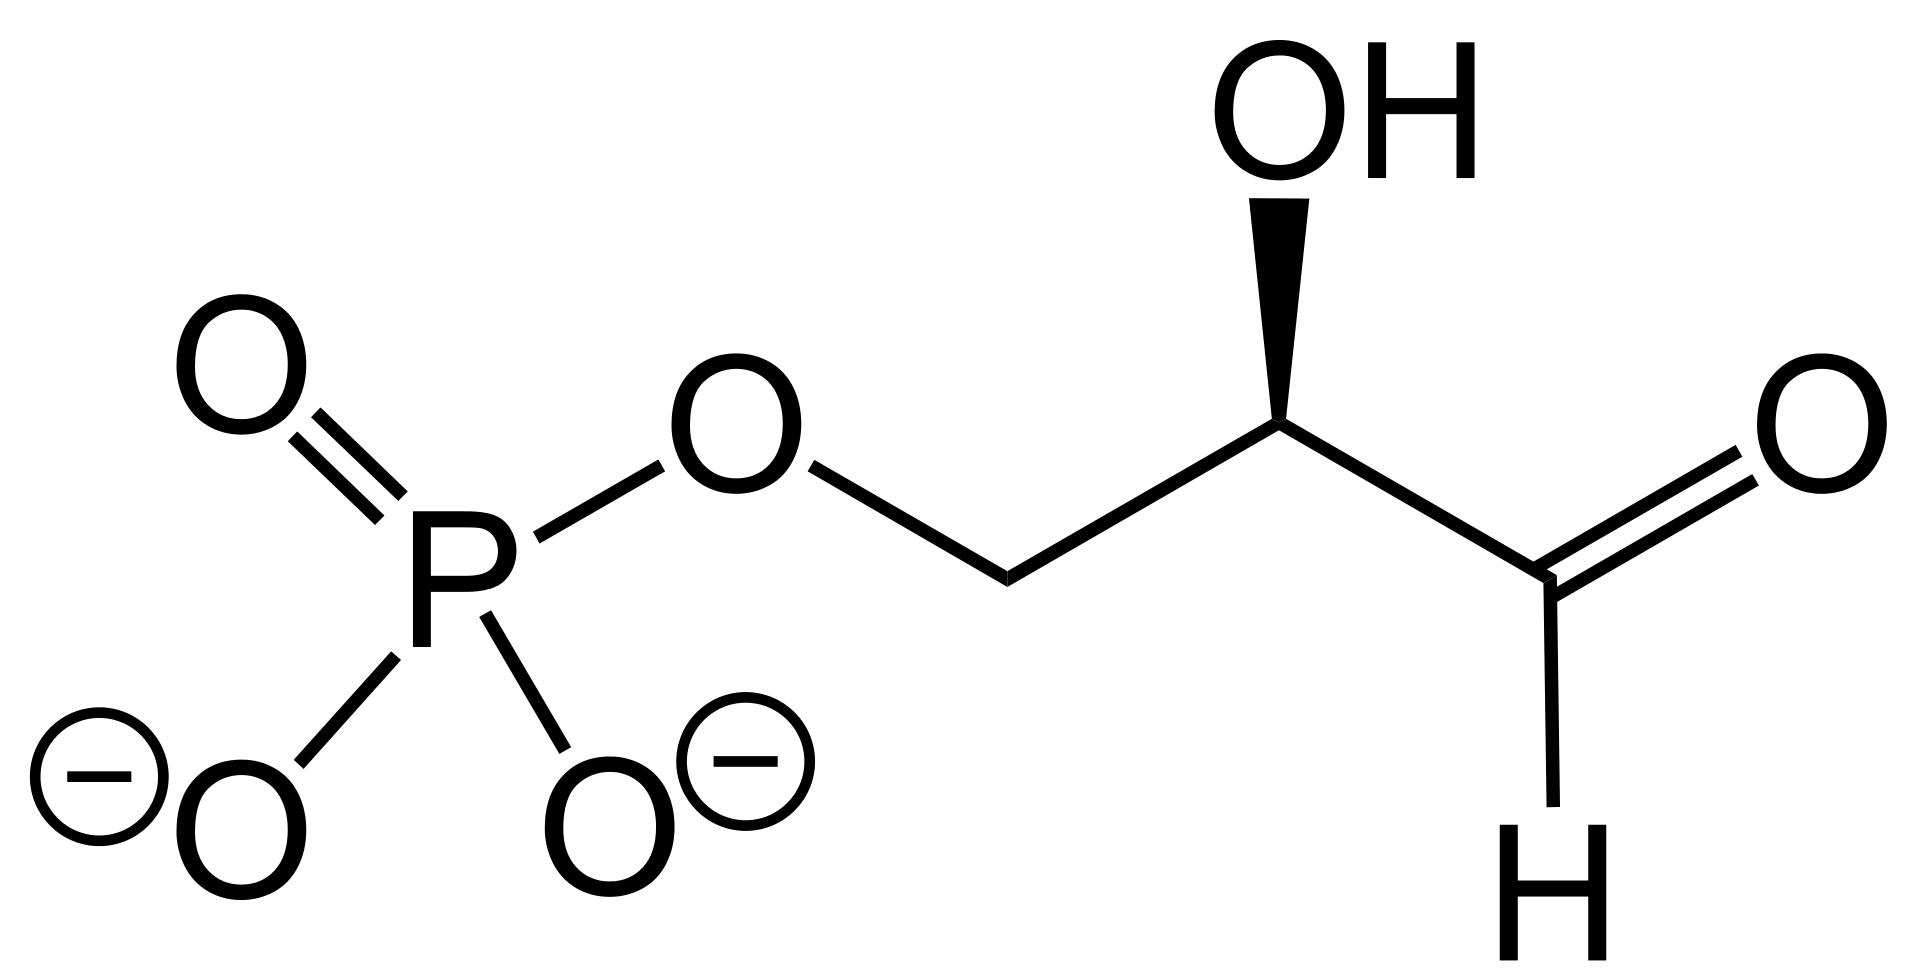 Molecular structure of glyceraldehyde 3-phosphatee